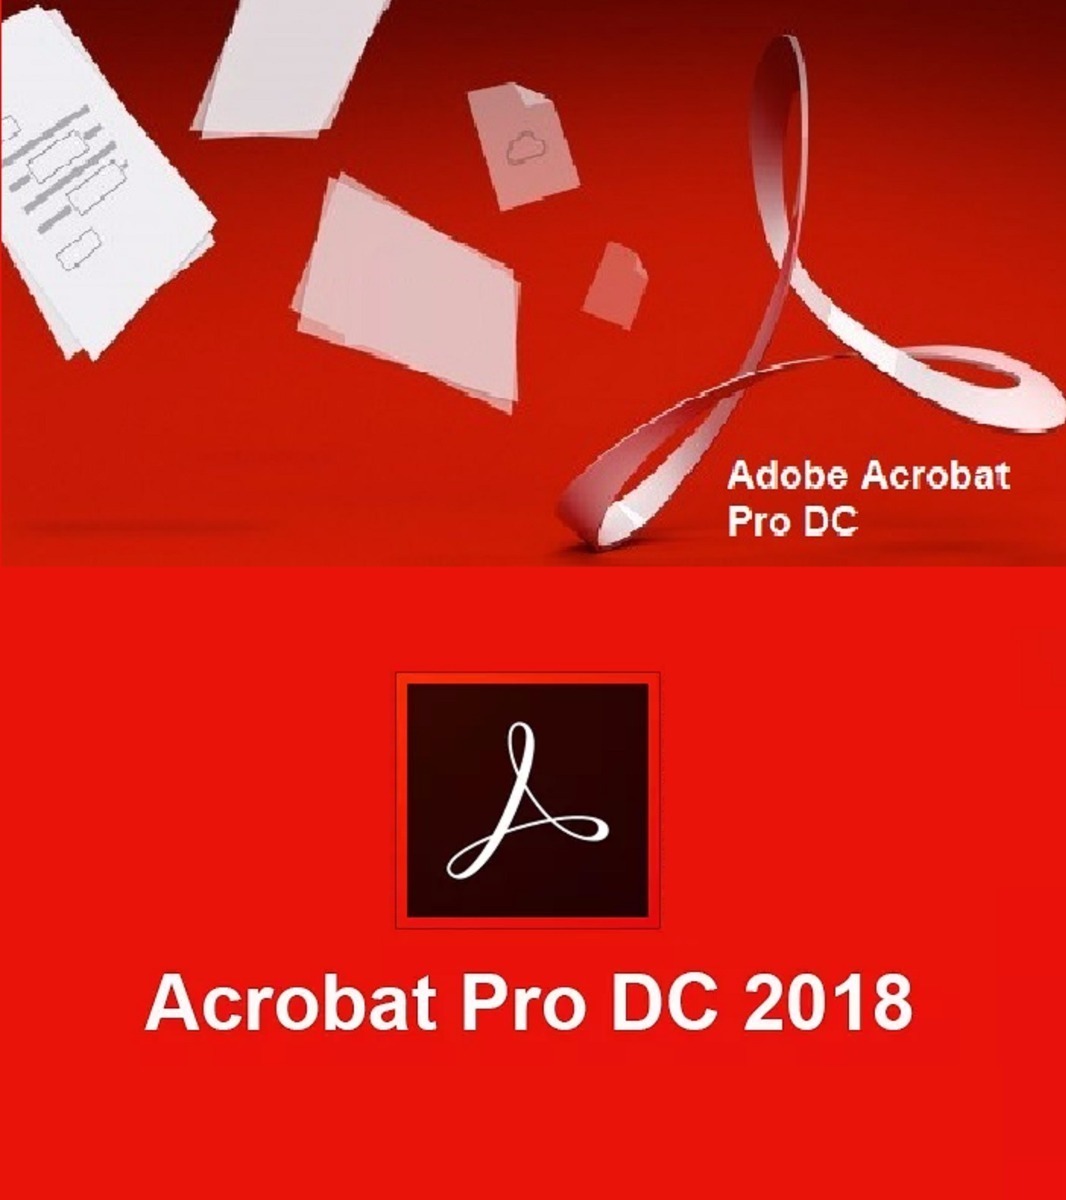 adobe acrobat pro dc 2018 trial download